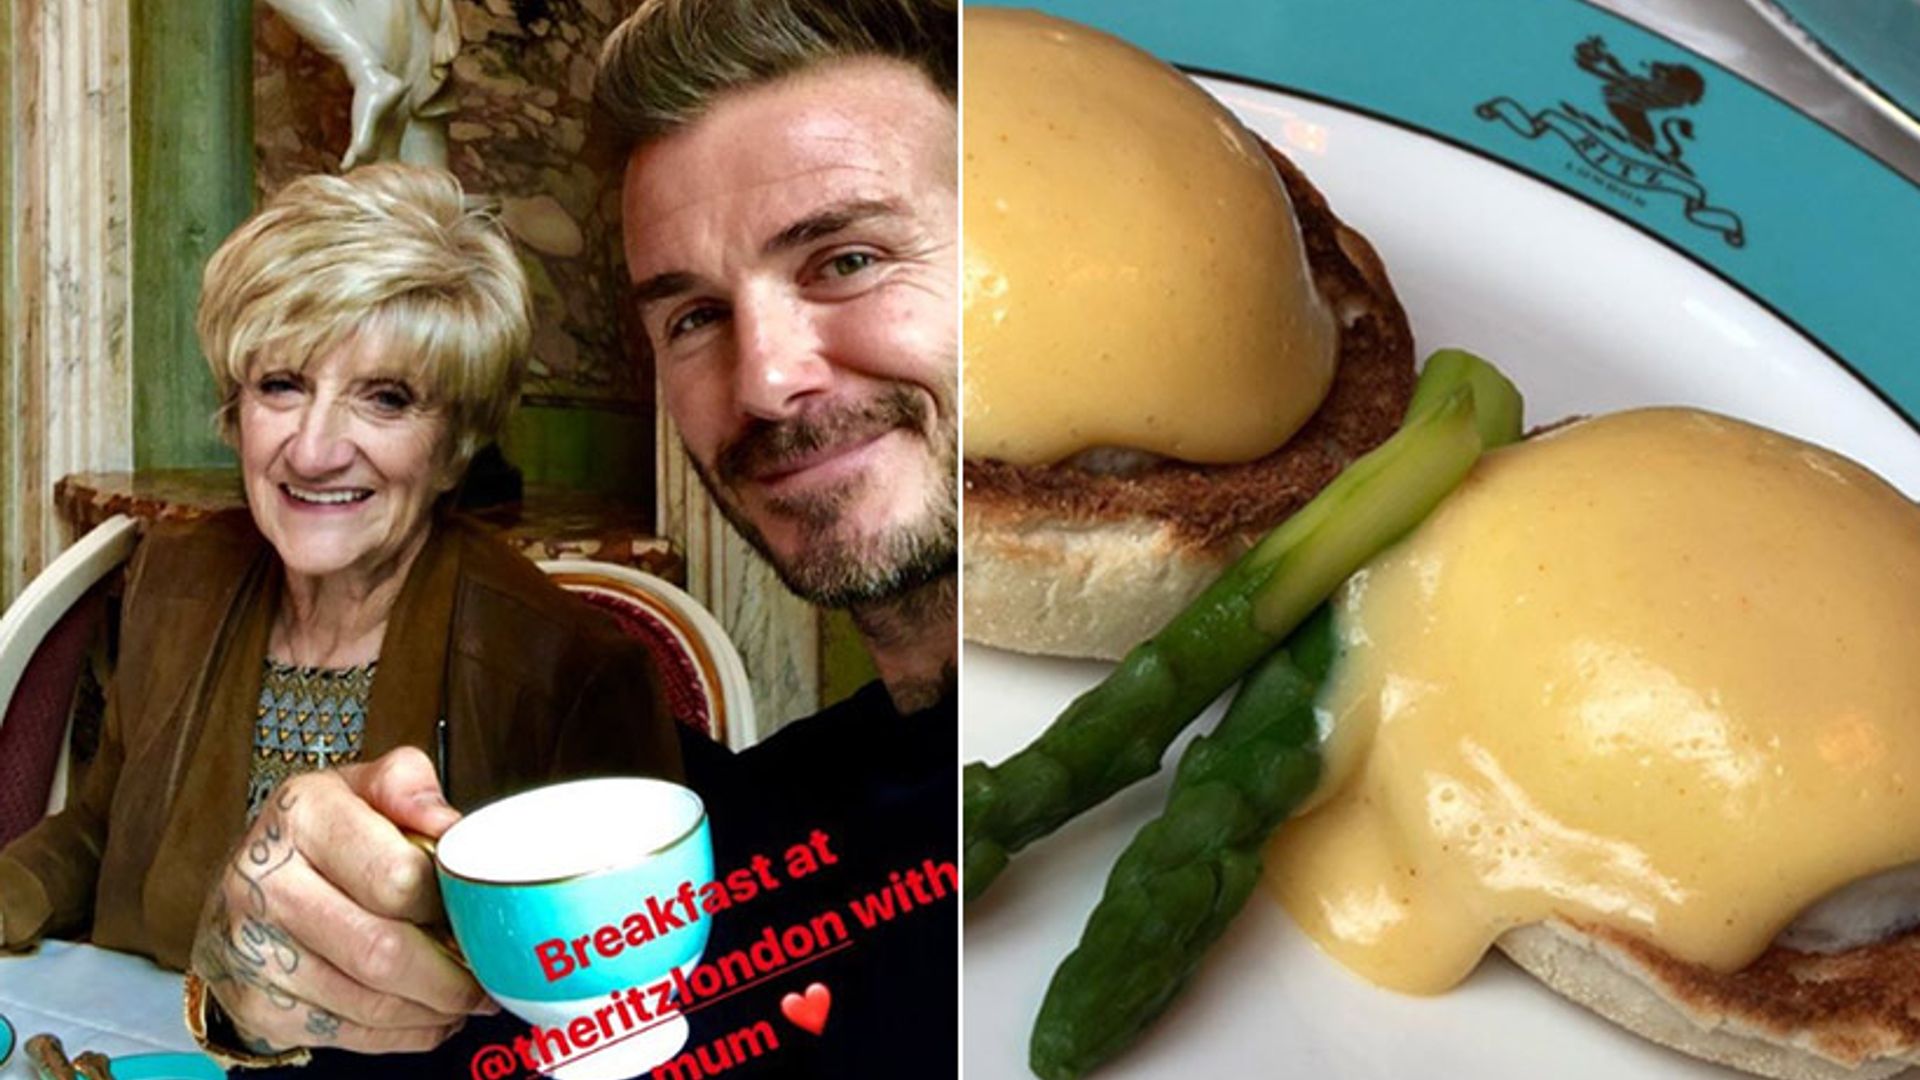 David Beckham treats his mum to breakfast at The Ritz